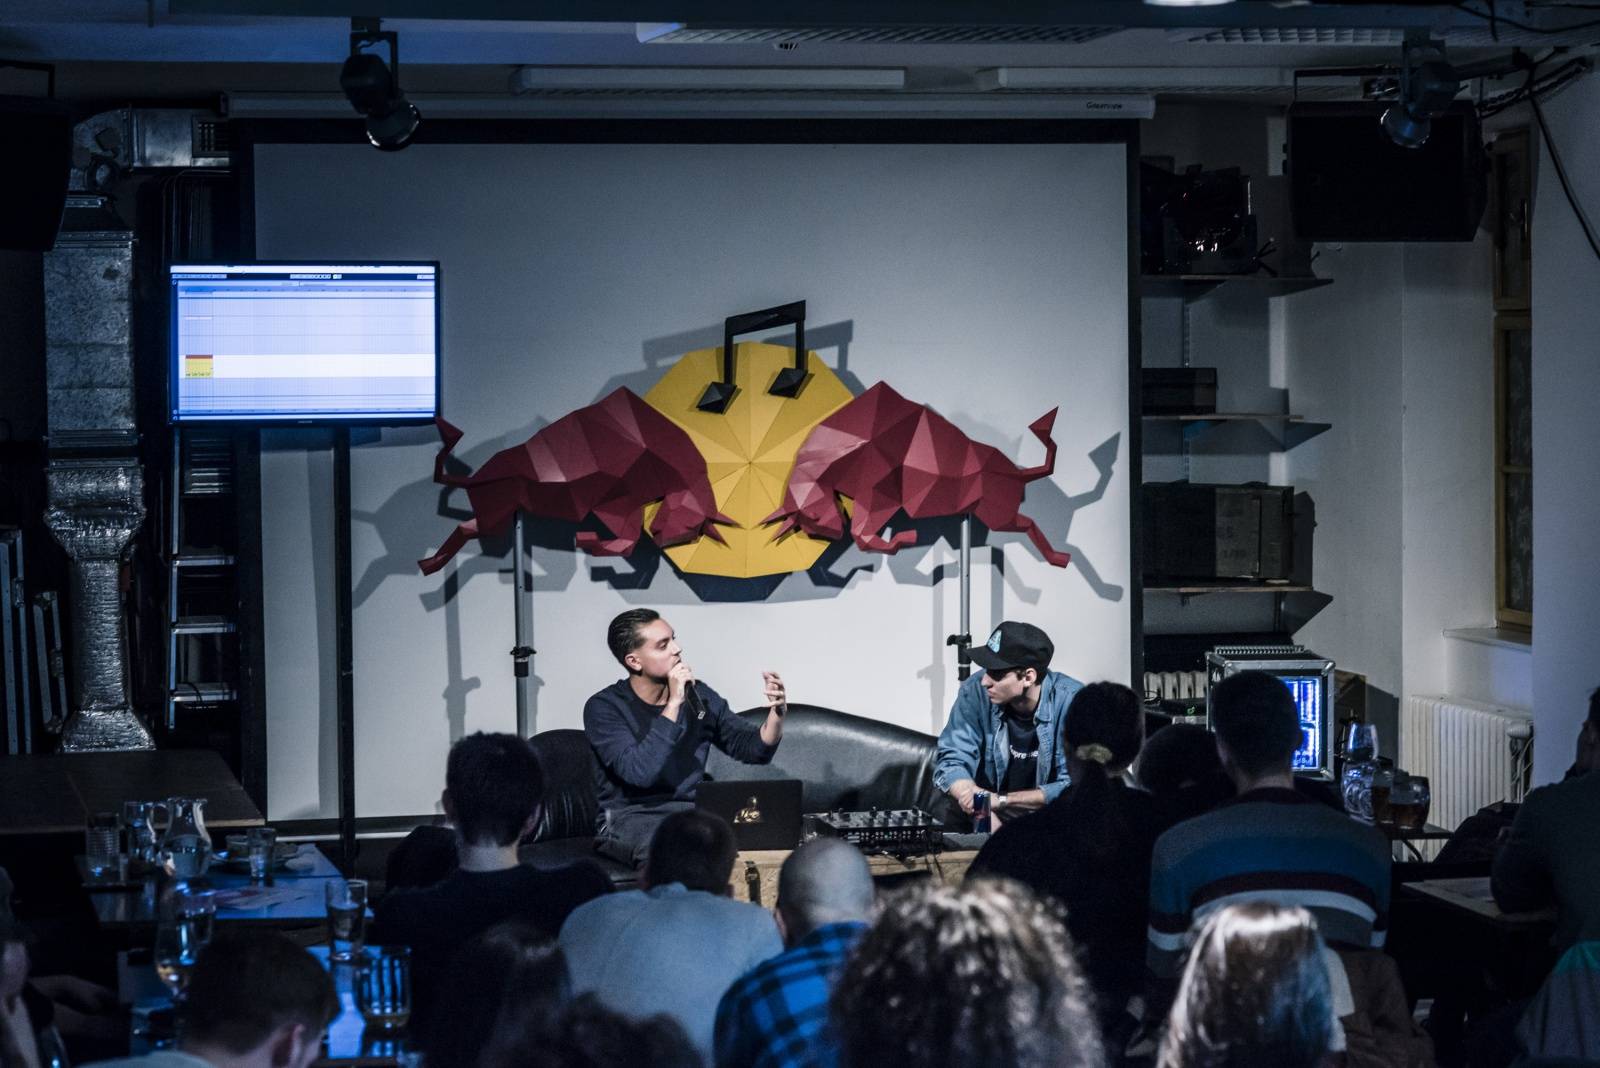 Brenmar v Brně koncertoval i pozval na Red Bull Music Academy